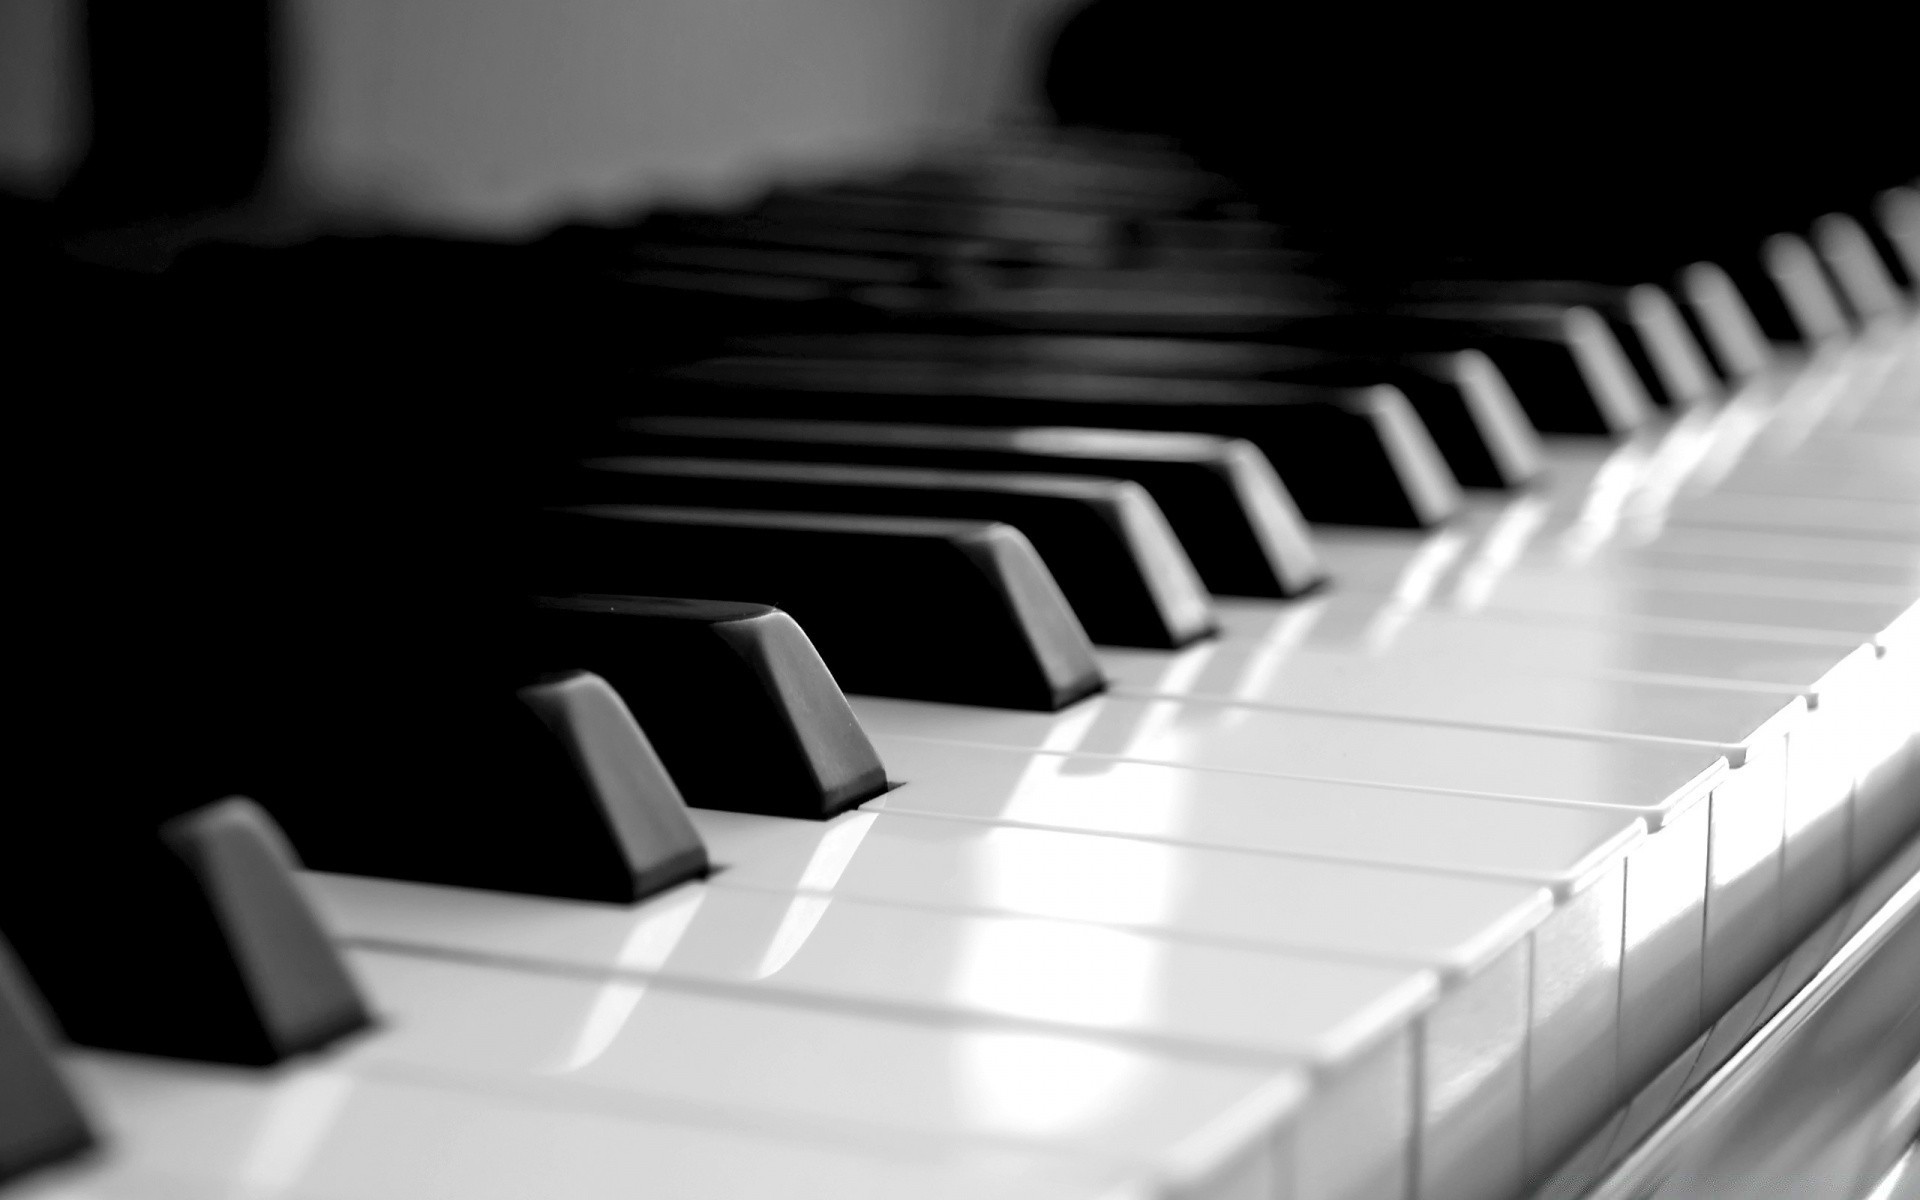 черно-белое фортепиано эбони кот синтезатор звук клавиатура аккорд пианист инструмент ключ джаз гармония музыка акустическая песня ритм классическая музыка тени оркестр